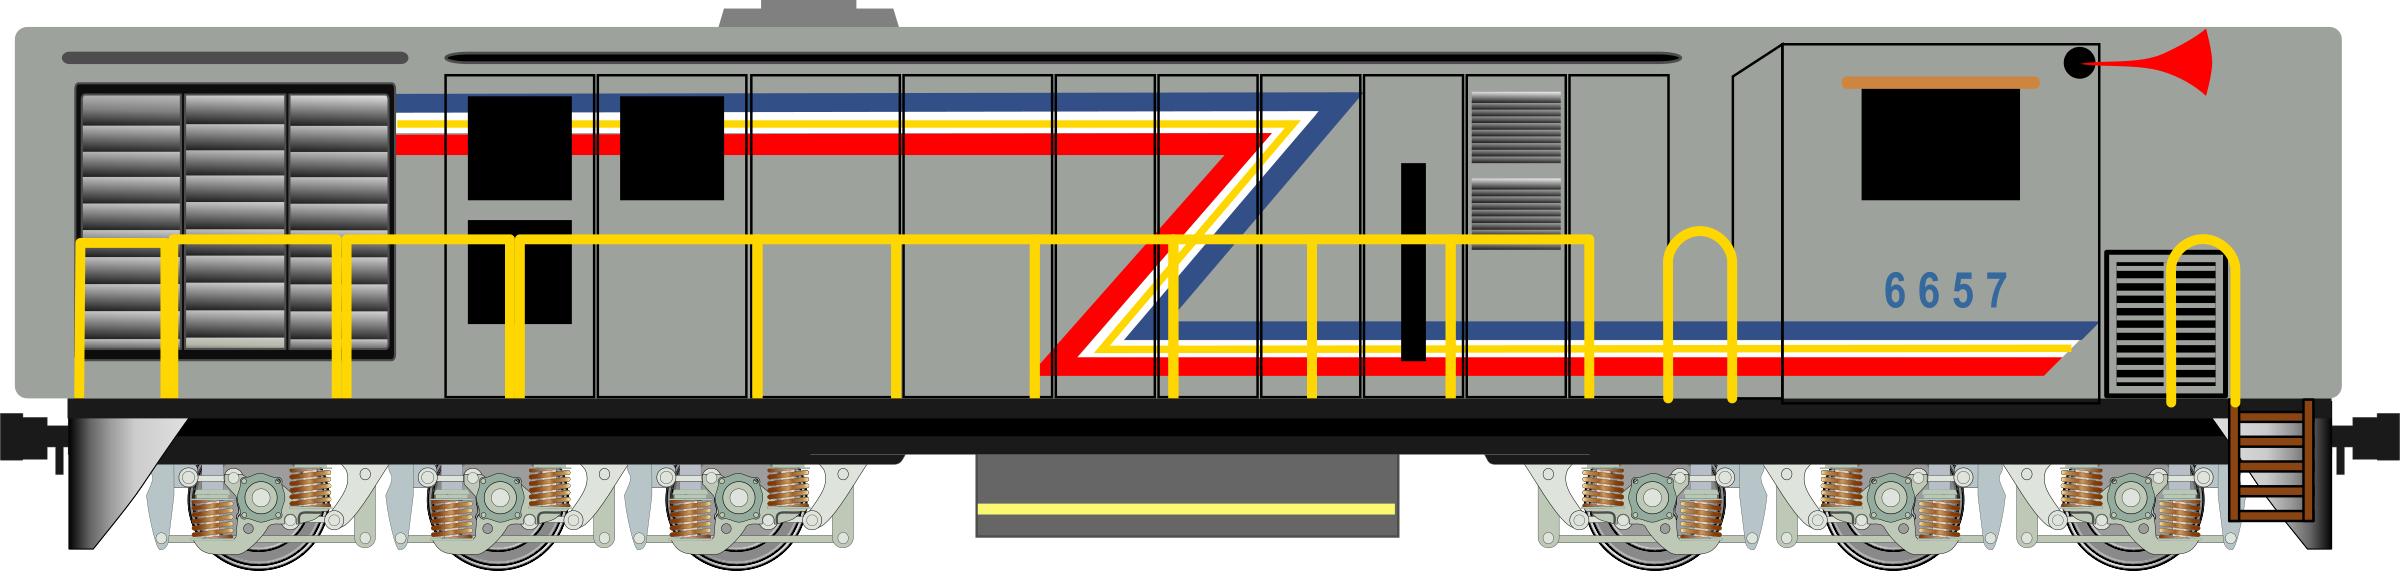 KTM YDM-Class Locomotive png